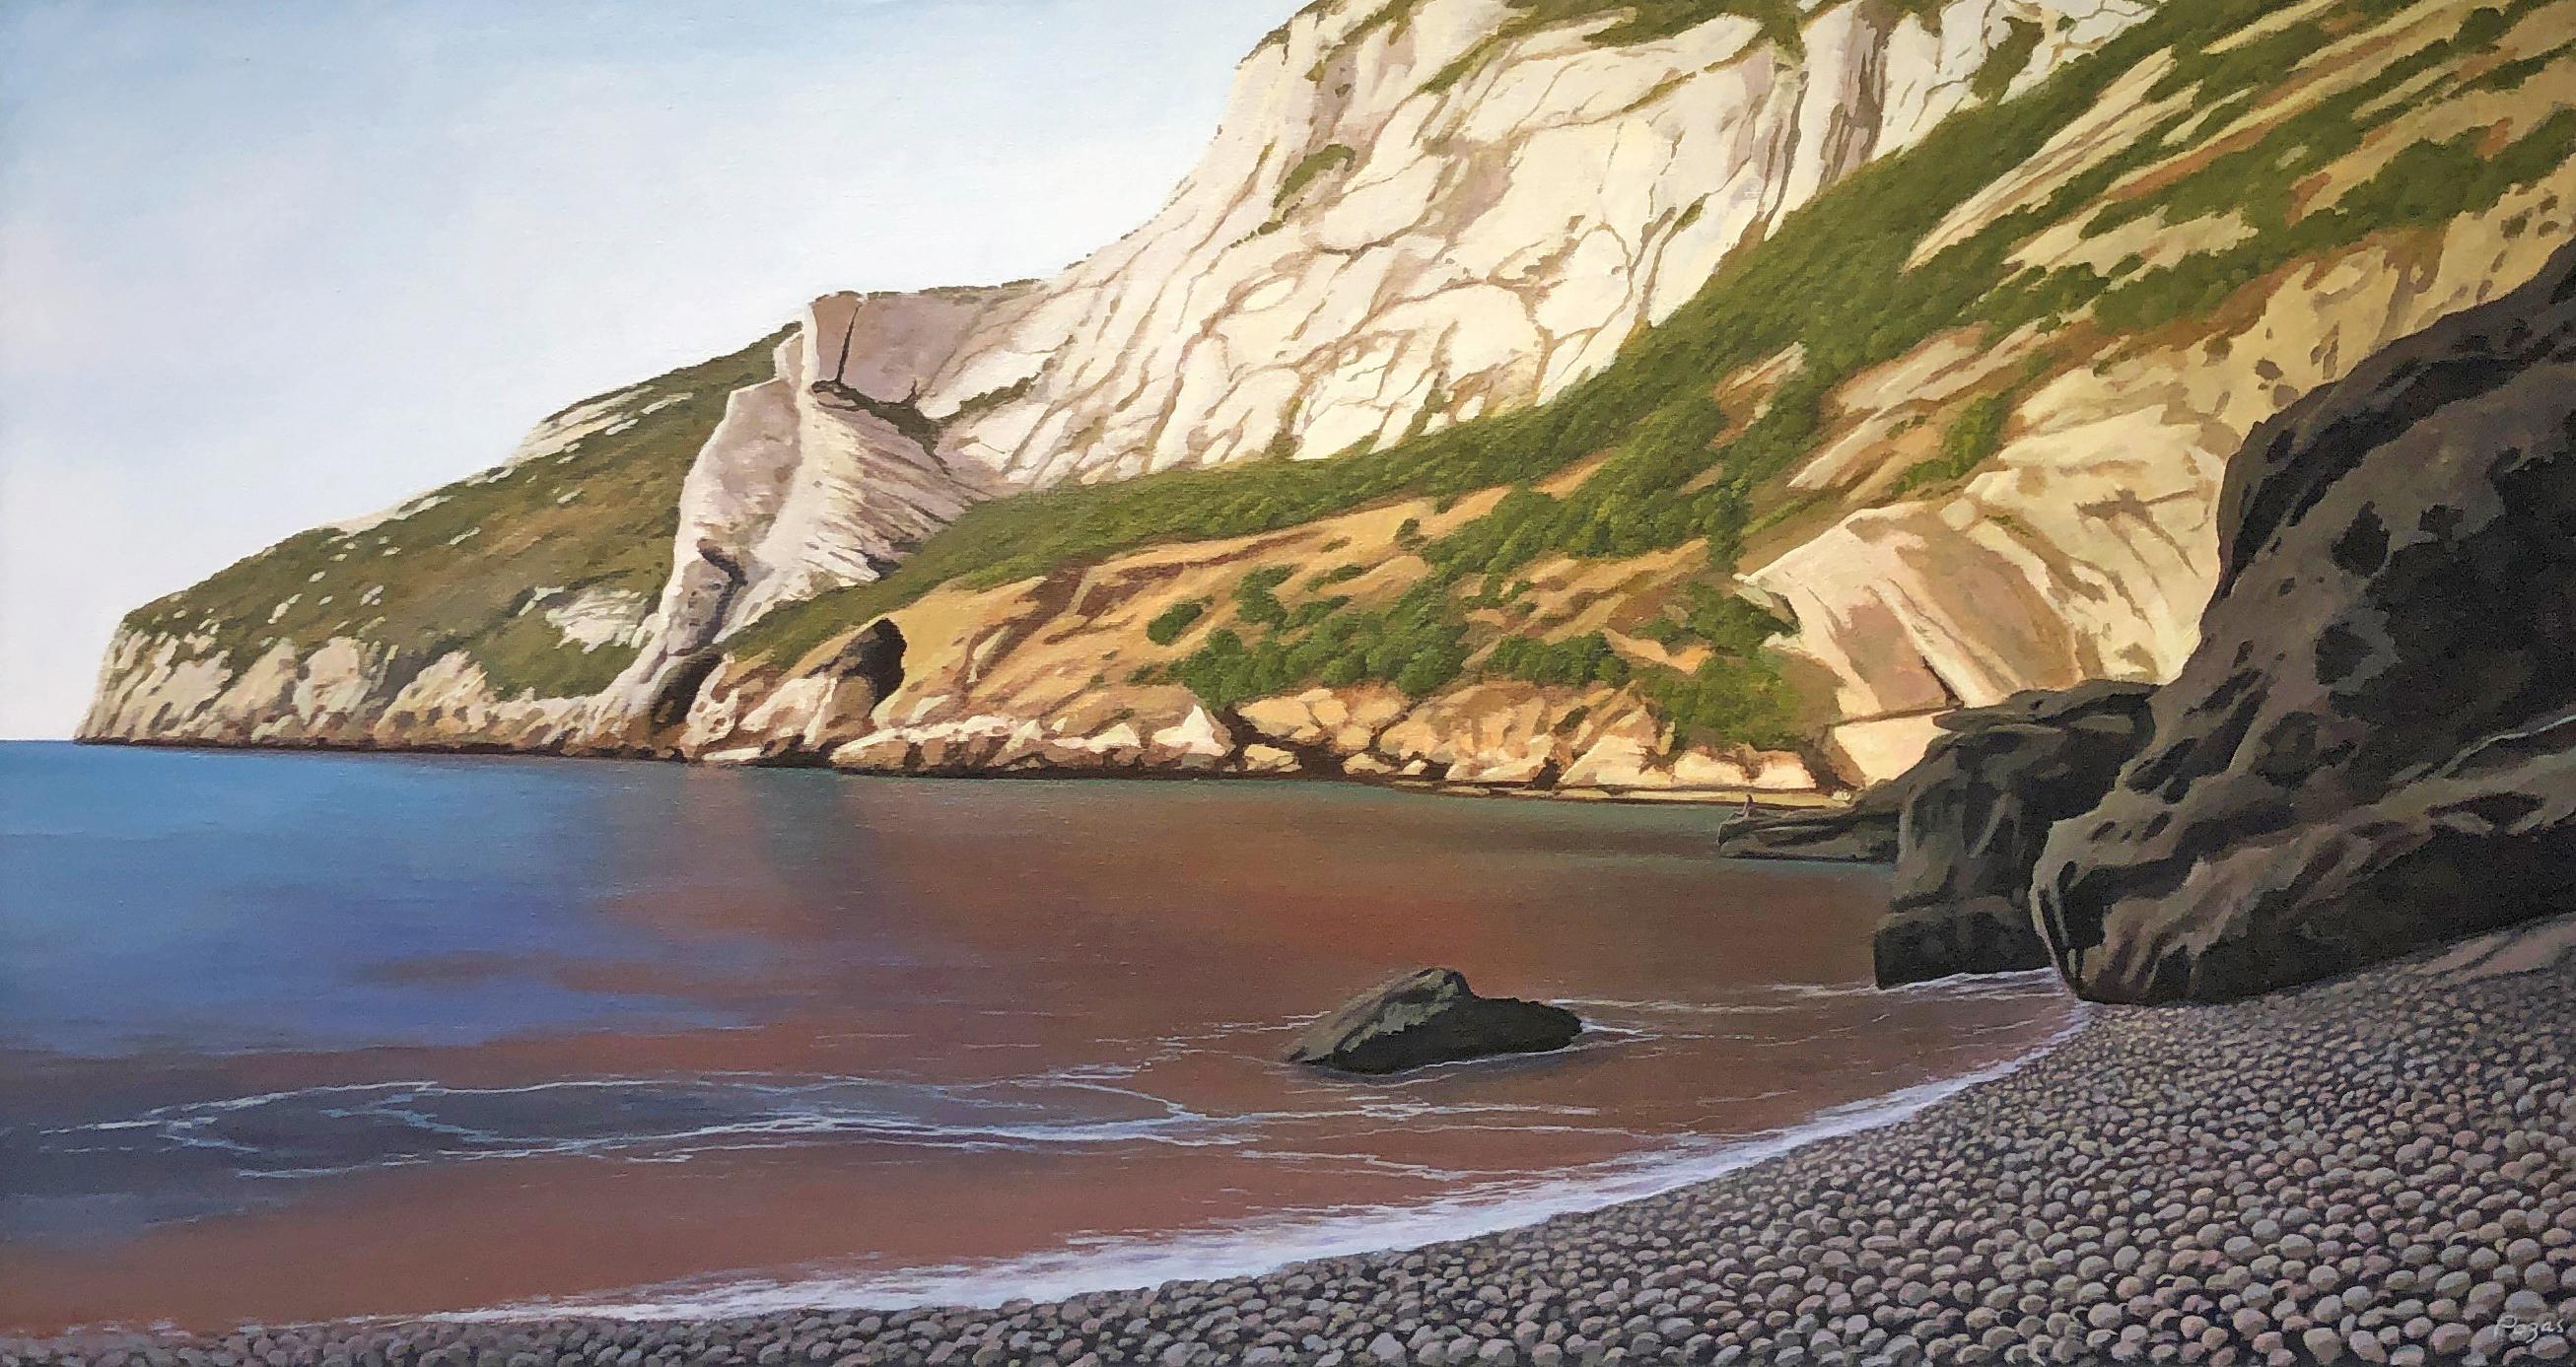 René Monzón Relova “Pozas” Landscape Painting -  Cala Granadella, Rocky Cliffs Diving into the Ocean, Detailed Surreal Landscape